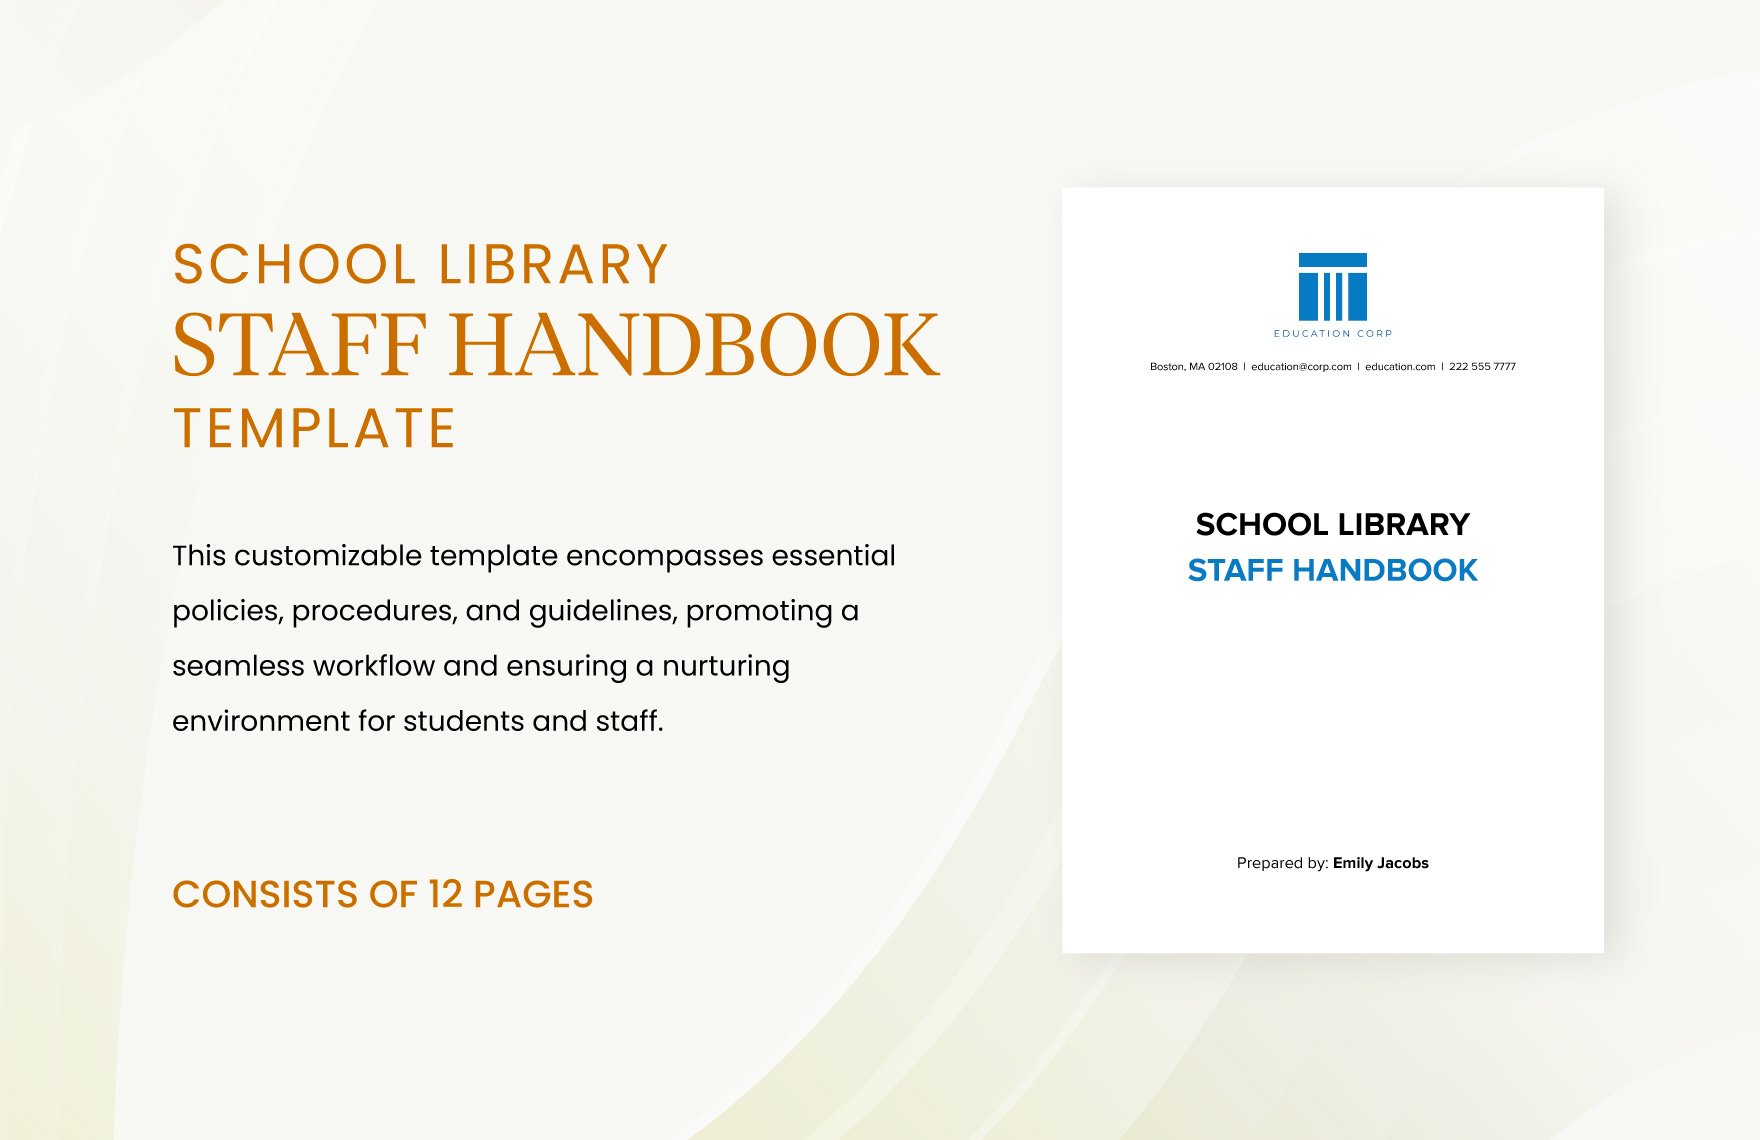 School Library Staff Handbook Template in Word, Google Docs, PDF